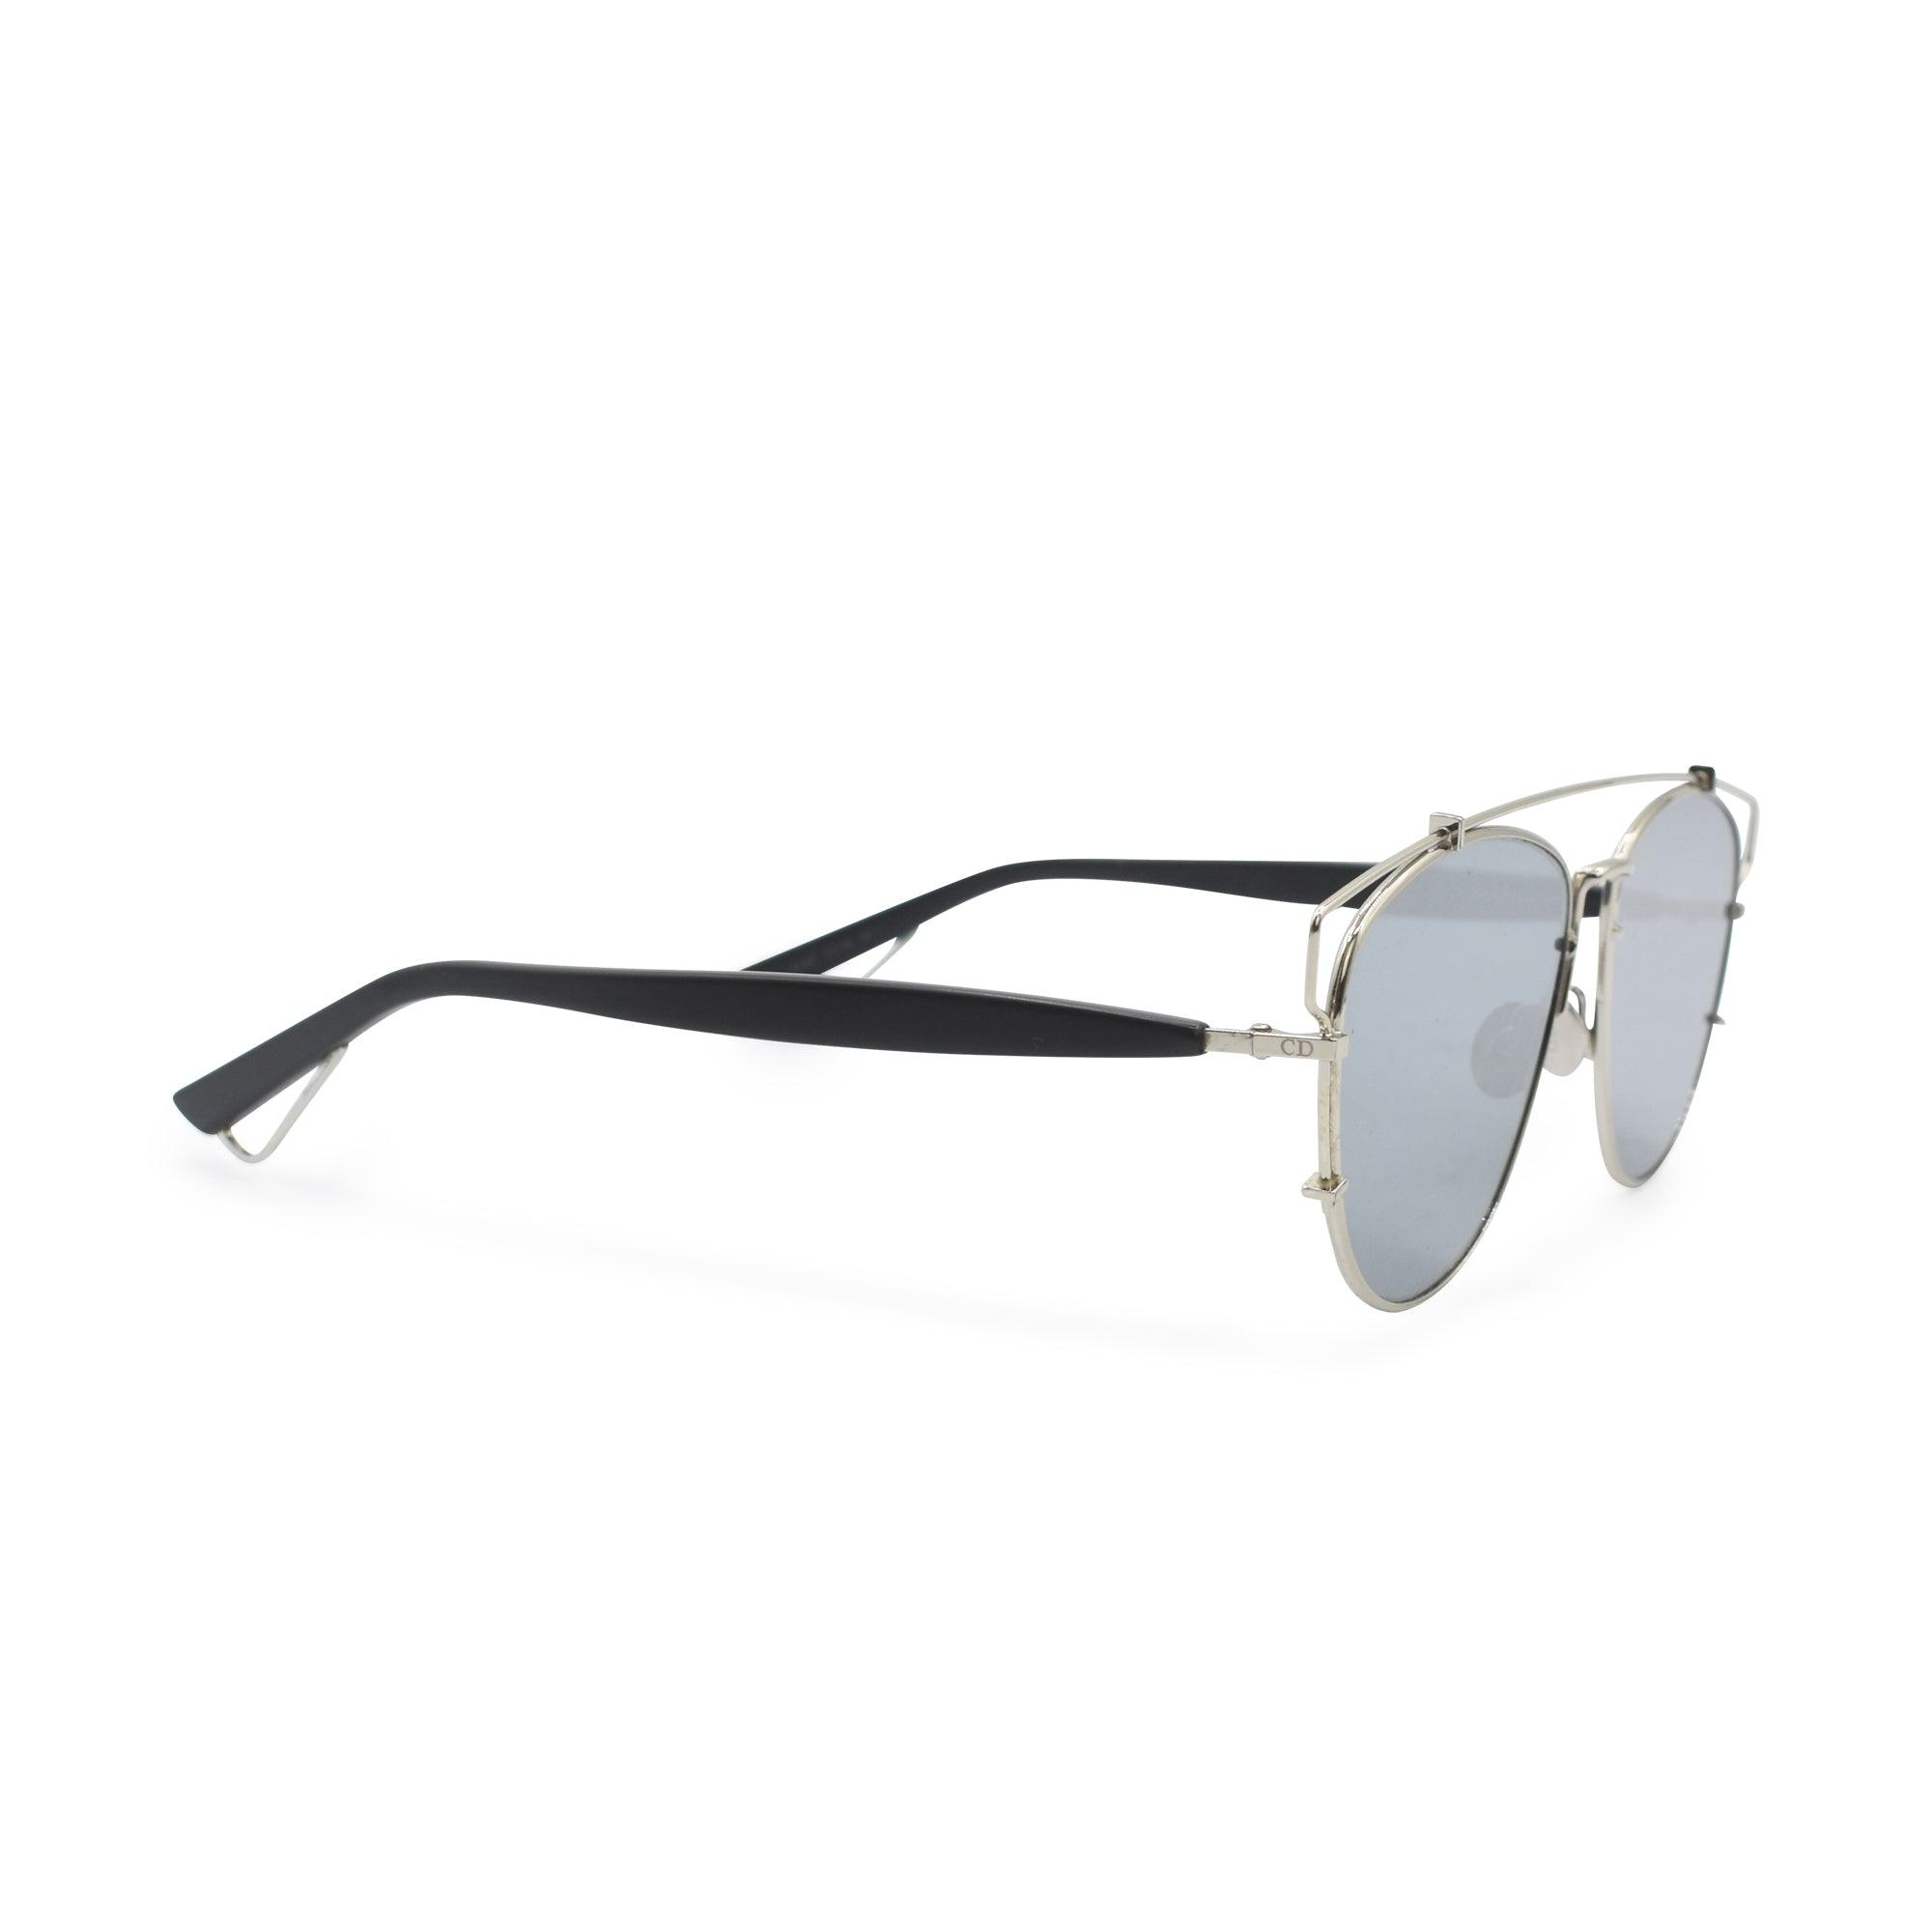 Christian Dior 'Technologic' Sunglasses - Fashionably Yours